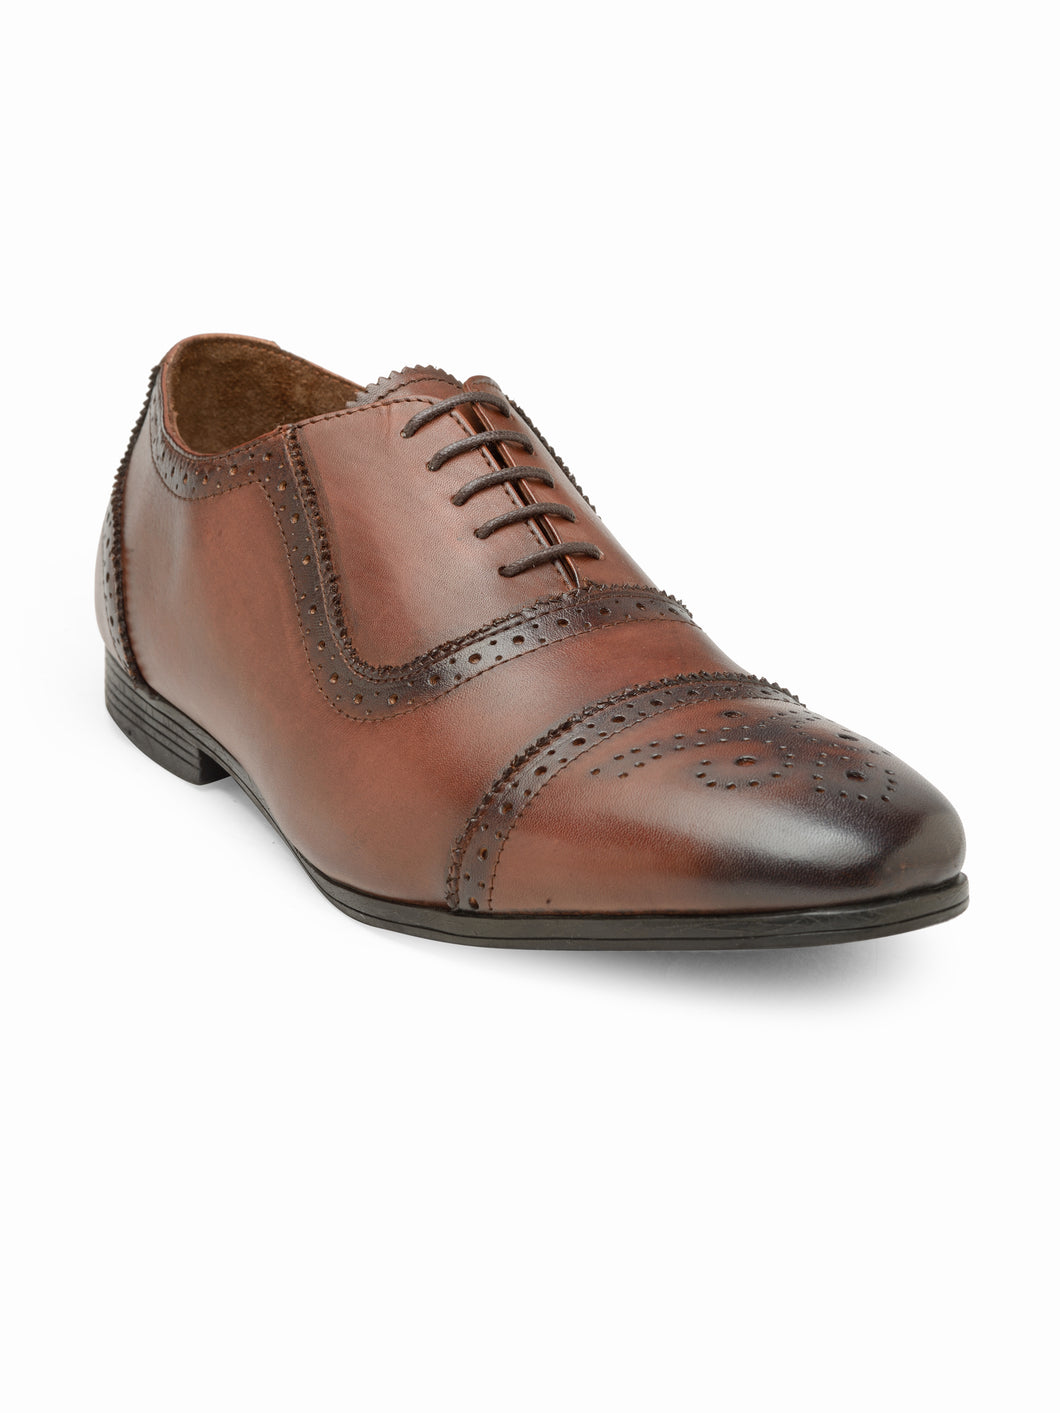 Teakwood Men Genuine Leather Two toned Wing Cap Brogues Formal/Casual Shoe